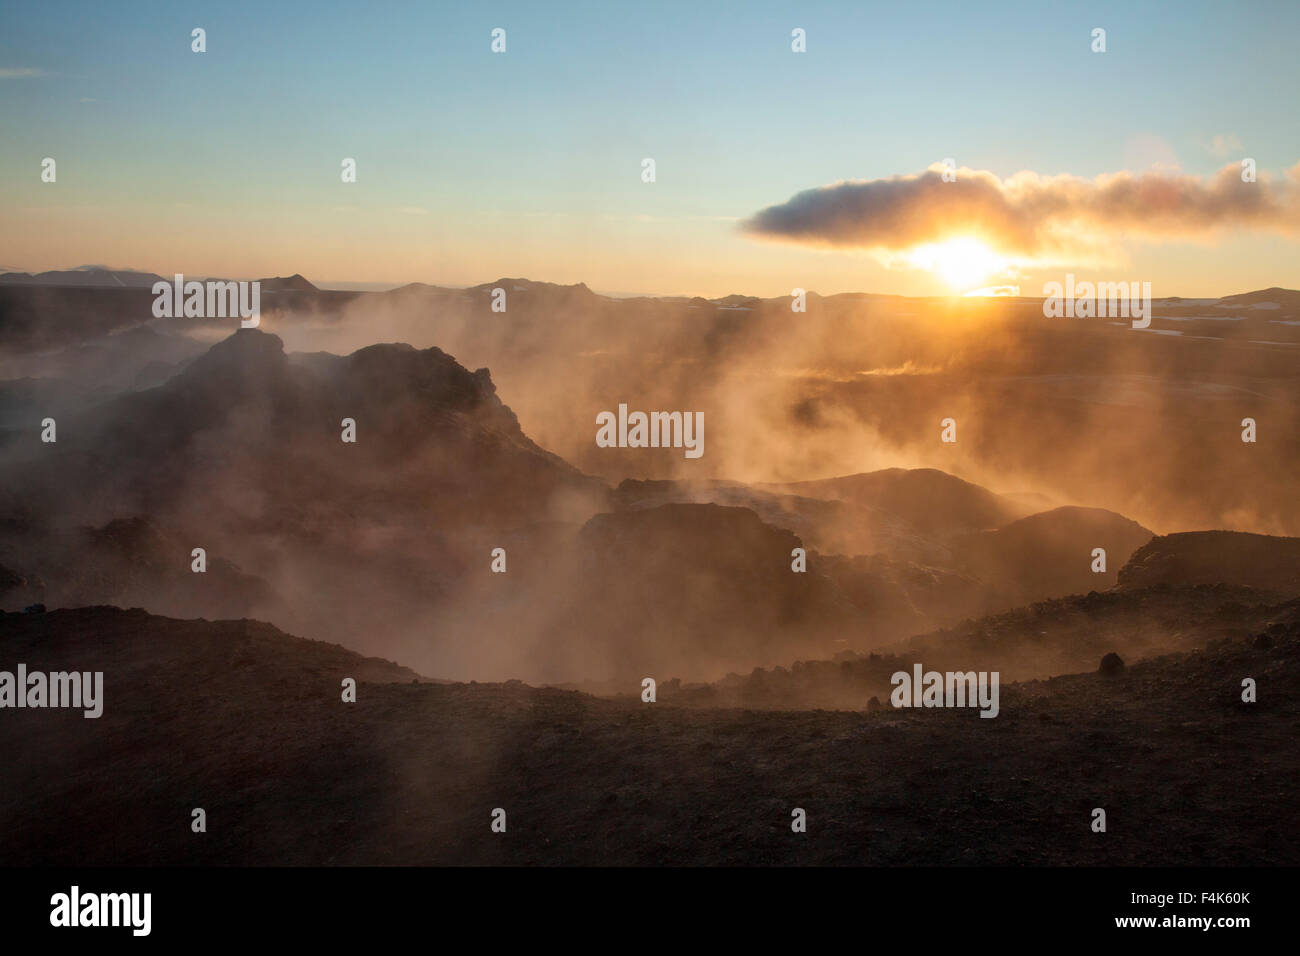 Sonnenaufgang über den schwelenden Lavafeld bei Leirhnjukur, Krafla-Vulkan, Myvatn, Nordhurland Eystra, Island. Stockfoto